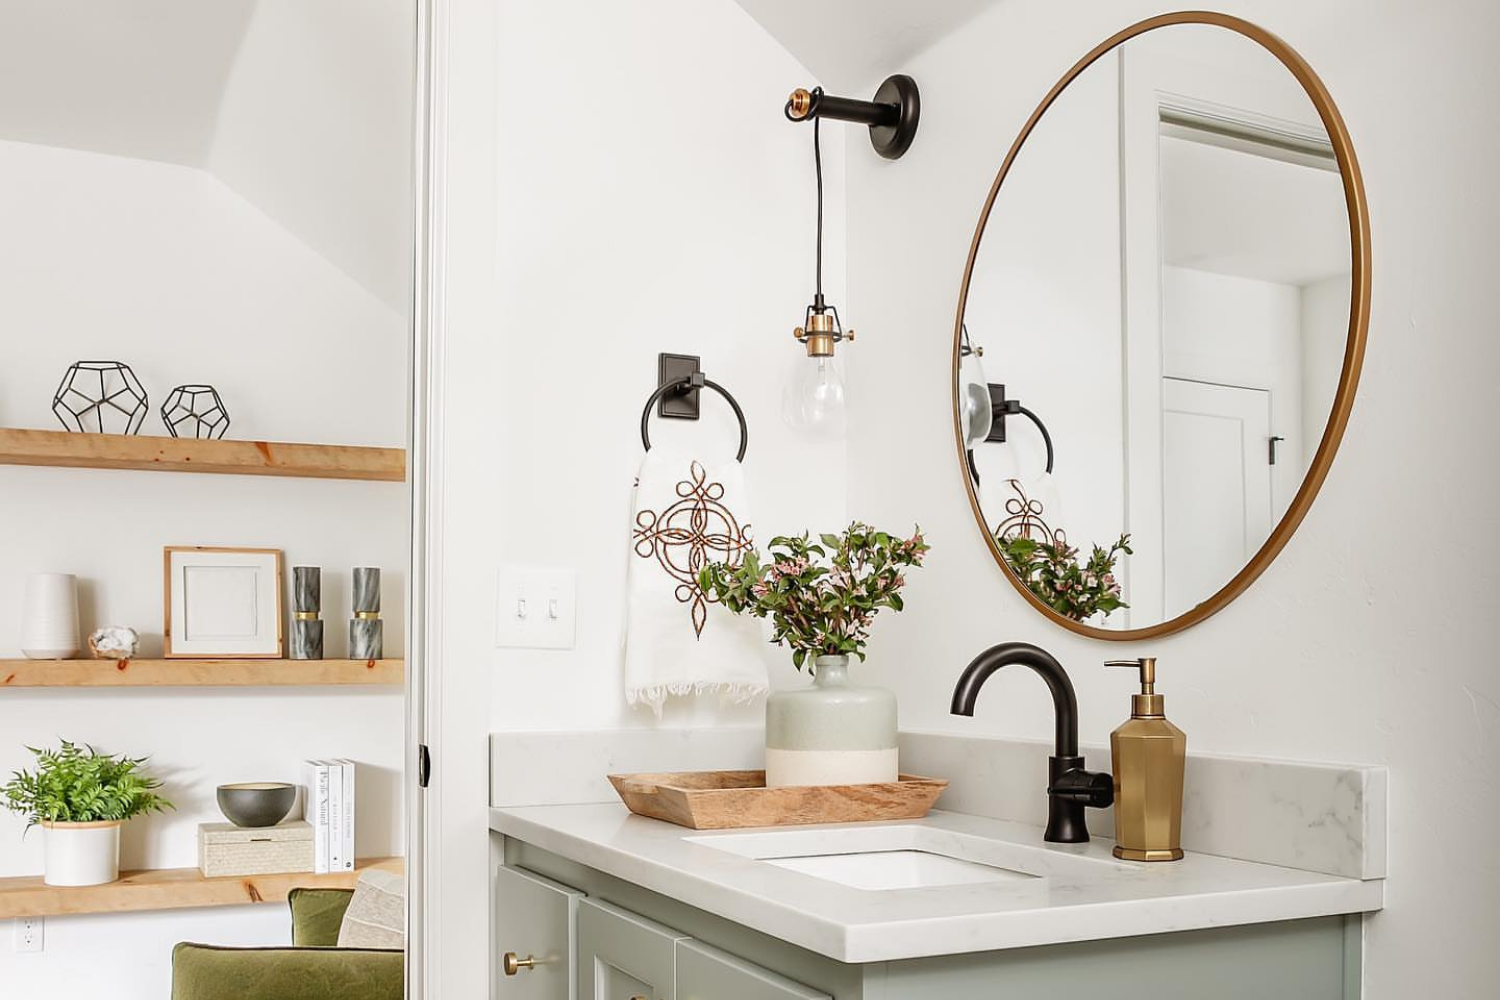 15 Beautiful Bathroom Ideas to Inspire Your Next Renovation